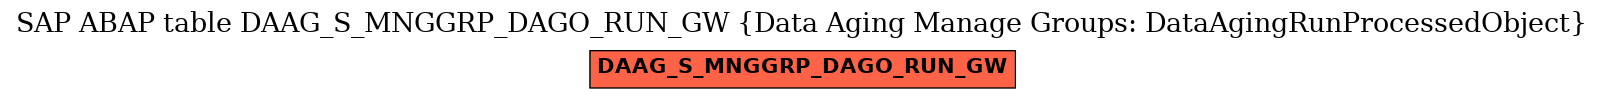 E-R Diagram for table DAAG_S_MNGGRP_DAGO_RUN_GW (Data Aging Manage Groups: DataAgingRunProcessedObject)